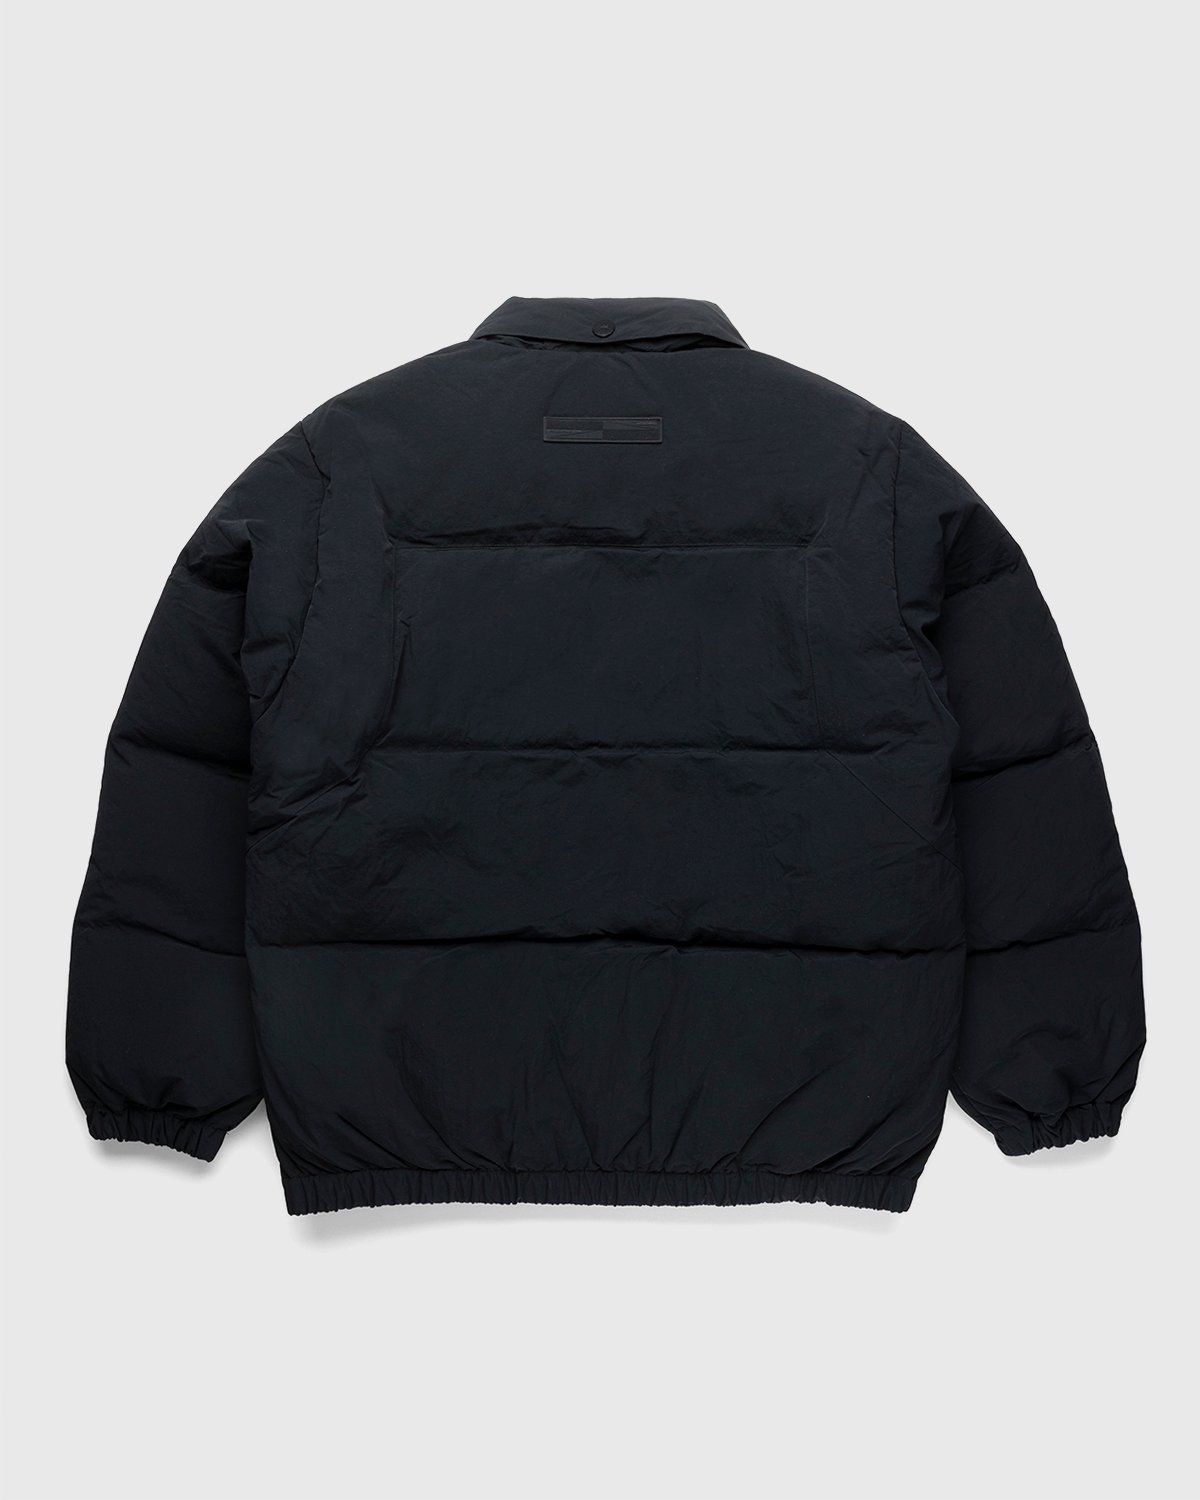 A-Cold-Wall* – Cirrus Jacket Black | Highsnobiety Shop